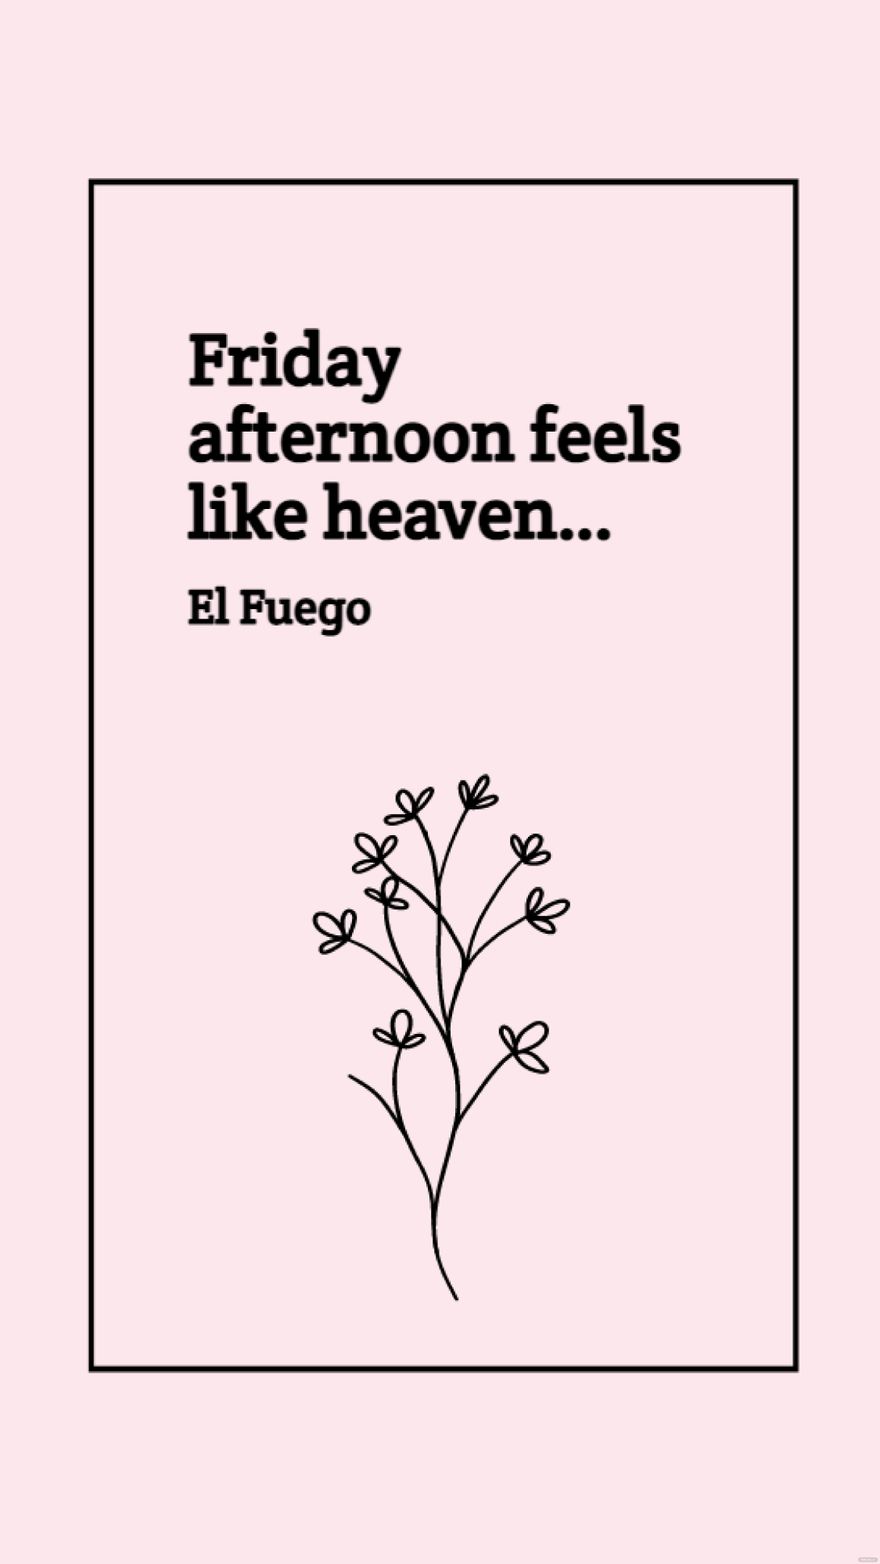 El Fuego - Friday afternoon feels like heaven… in JPG